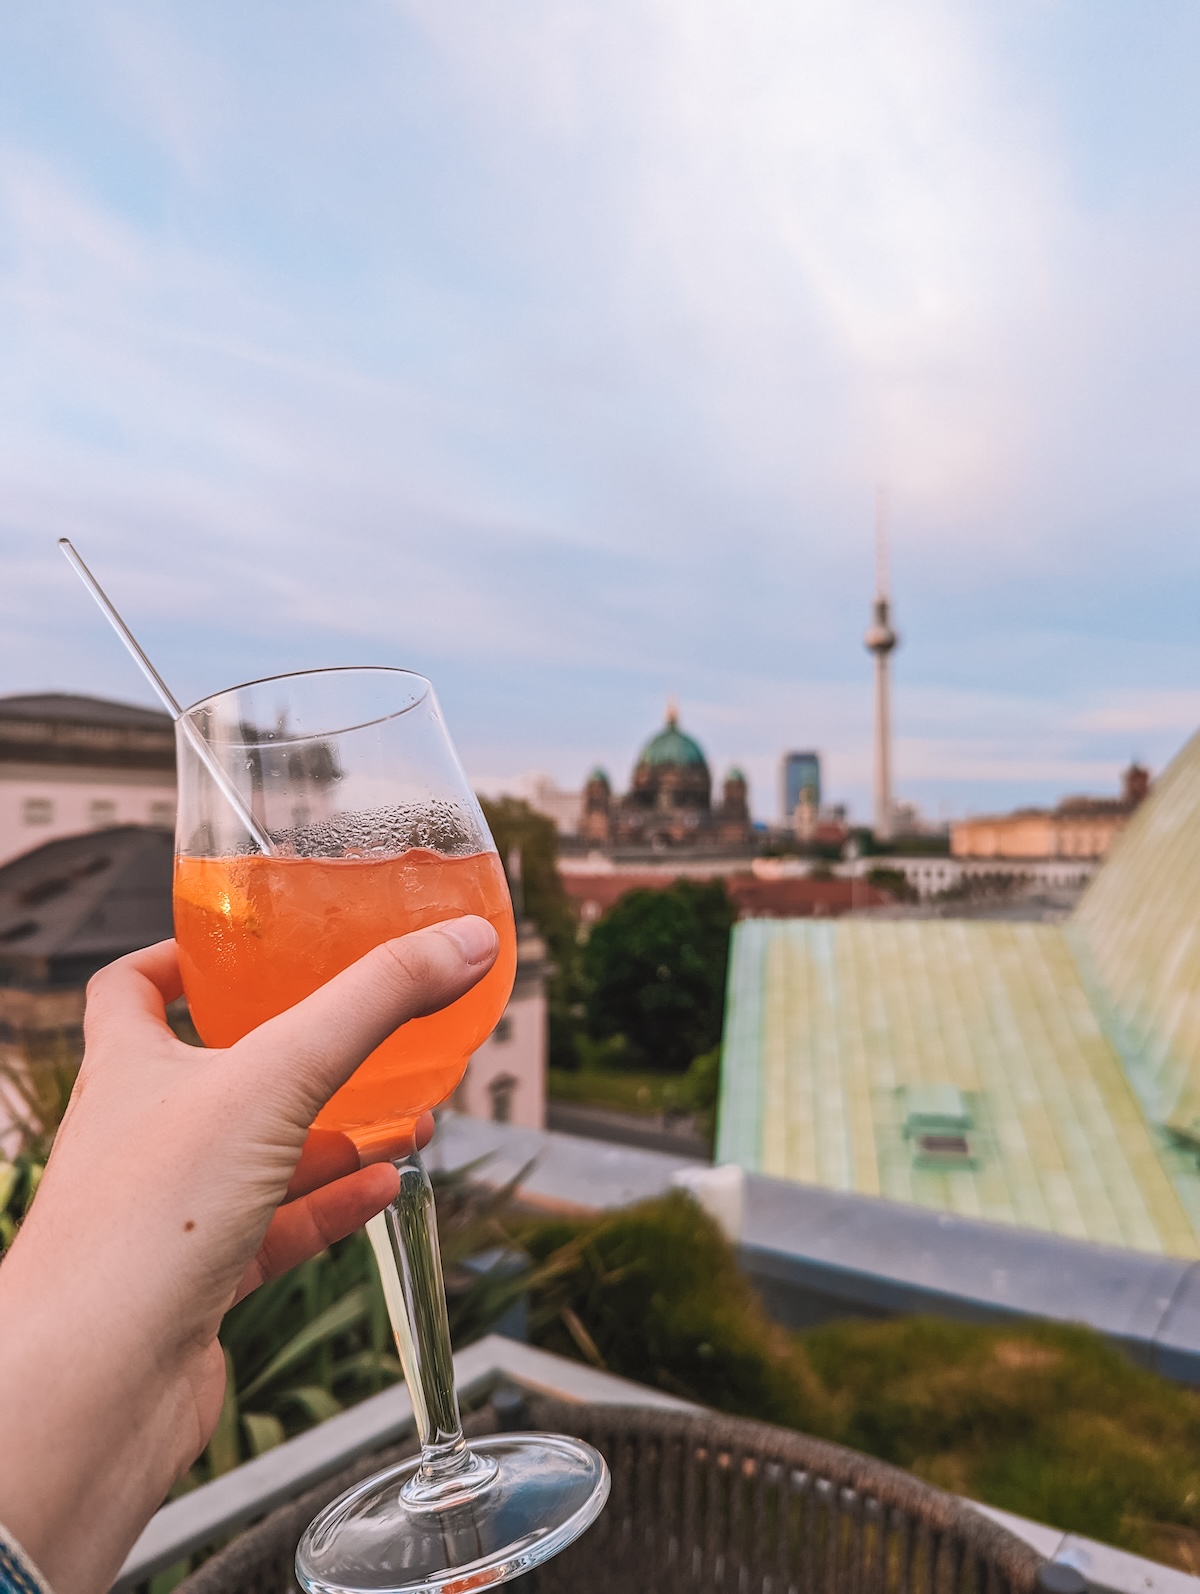 An Aperol spritz being held aloft from the Hotel de Rome rooftop bar.